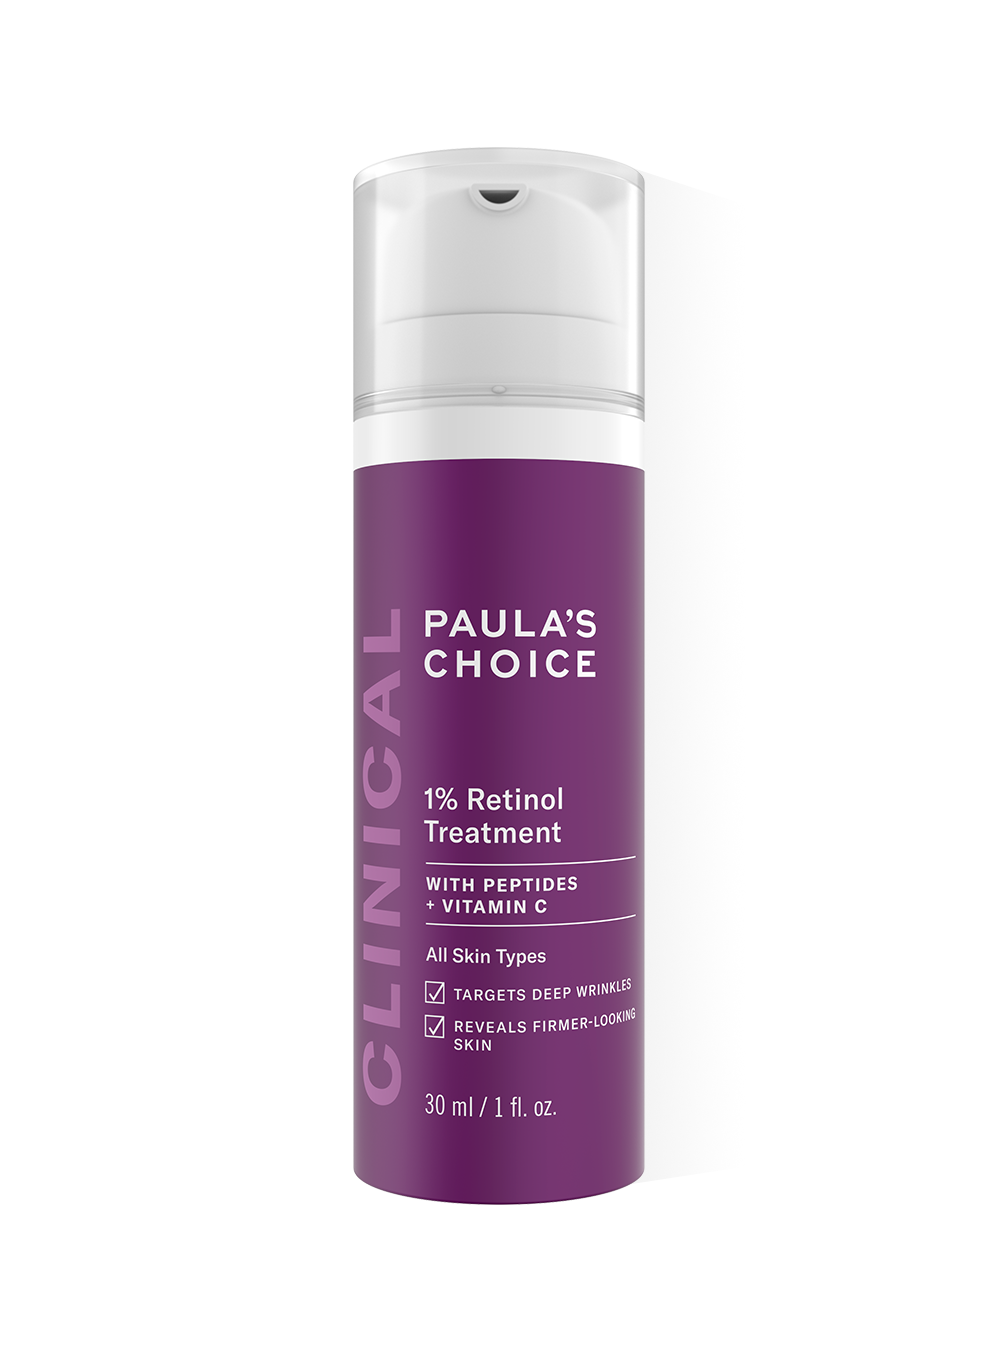 Kem trị thâm mụn, nám Clinical 1% Retinol Paula’s Choice - 30 ml